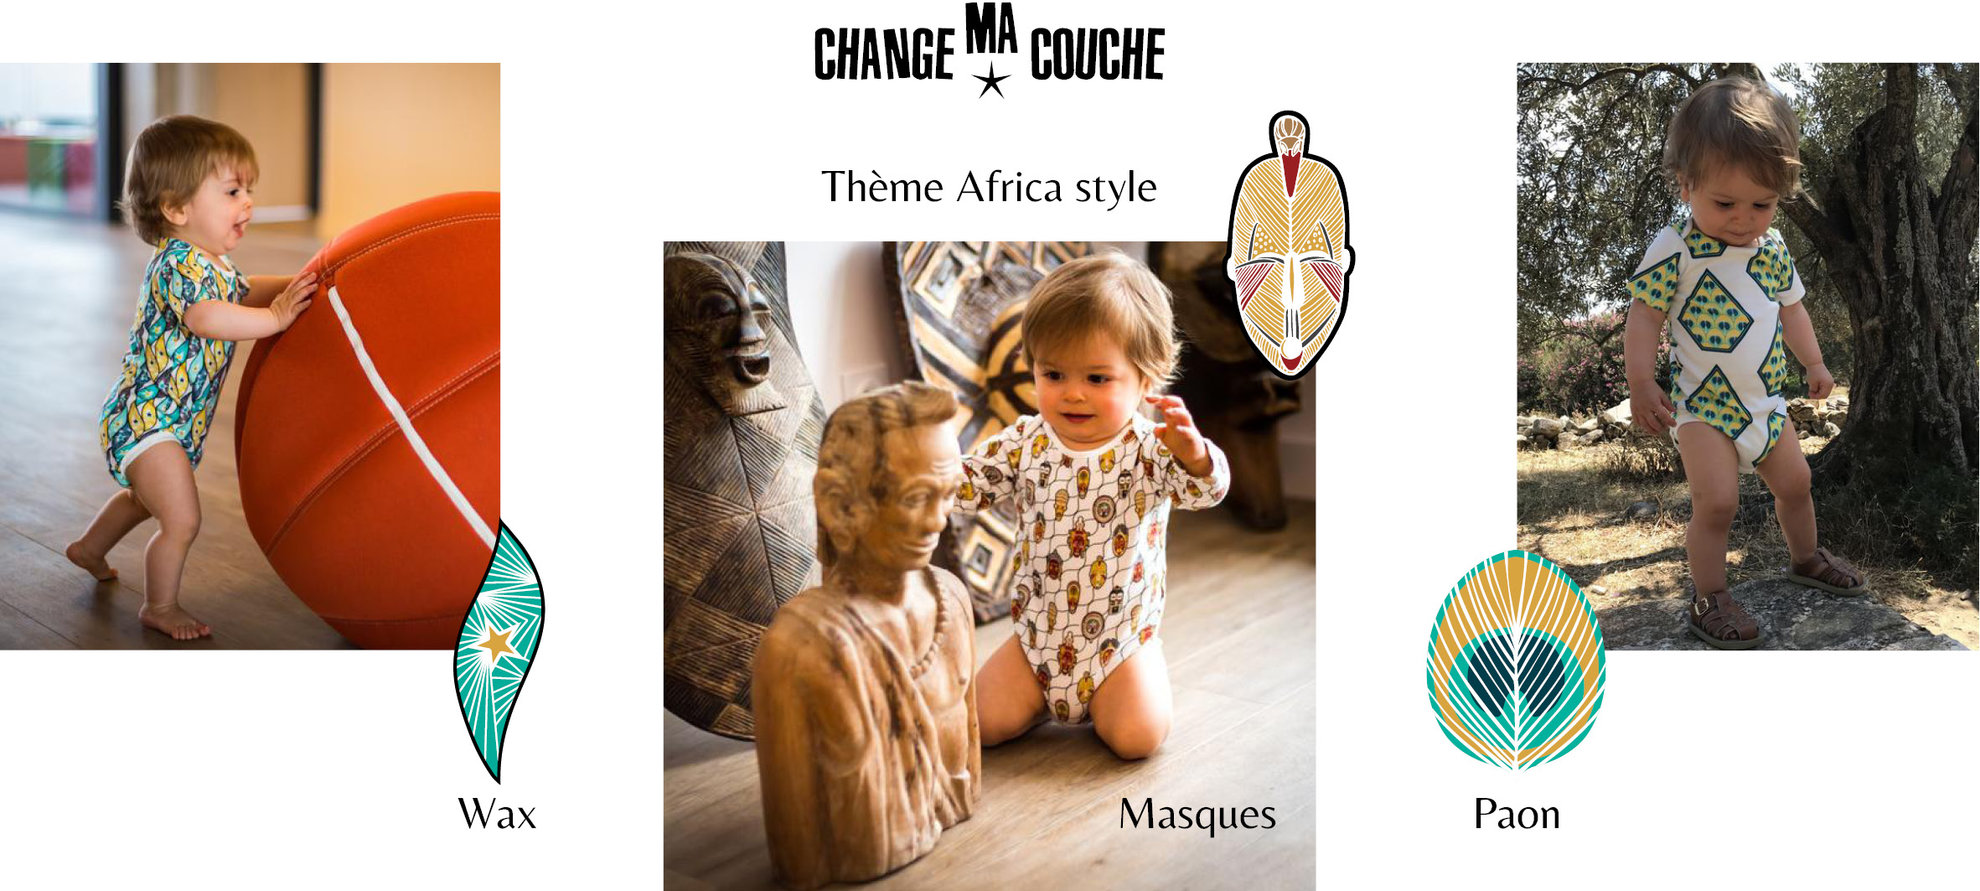 Dessins textile Africa style pour Change Ma Couche.